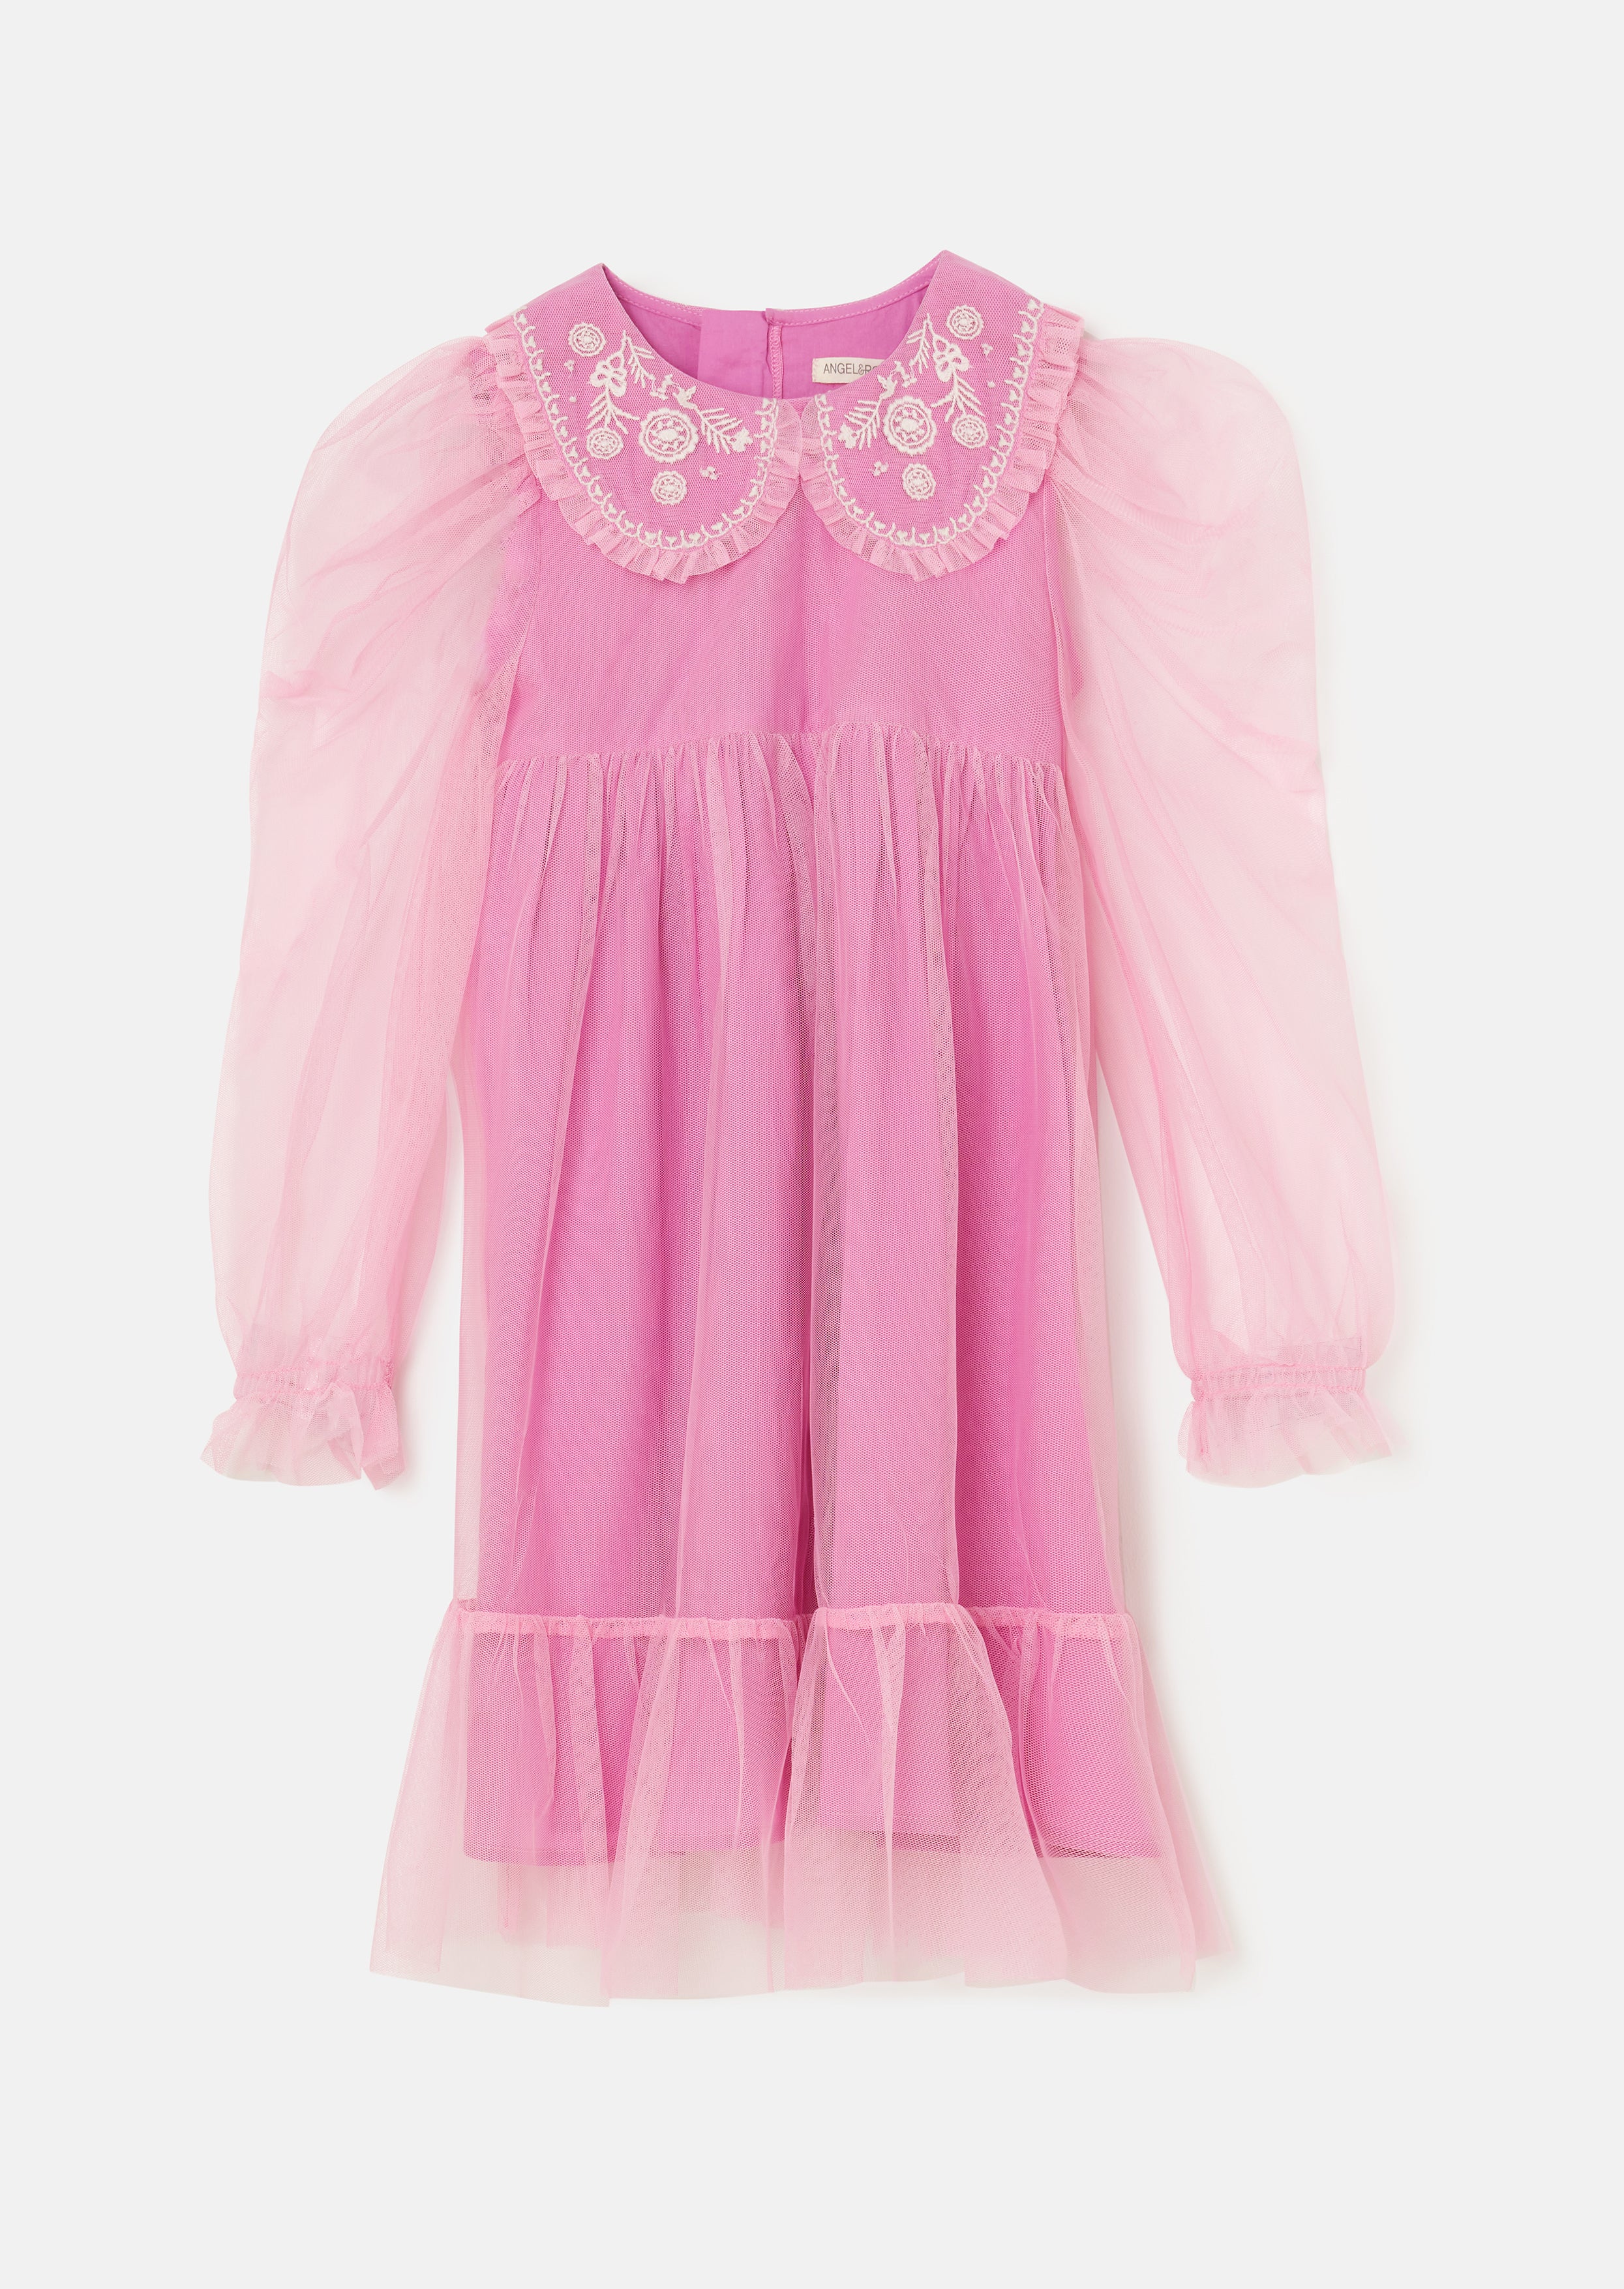 Girls Pink Mesh Floral Embroidered Dress